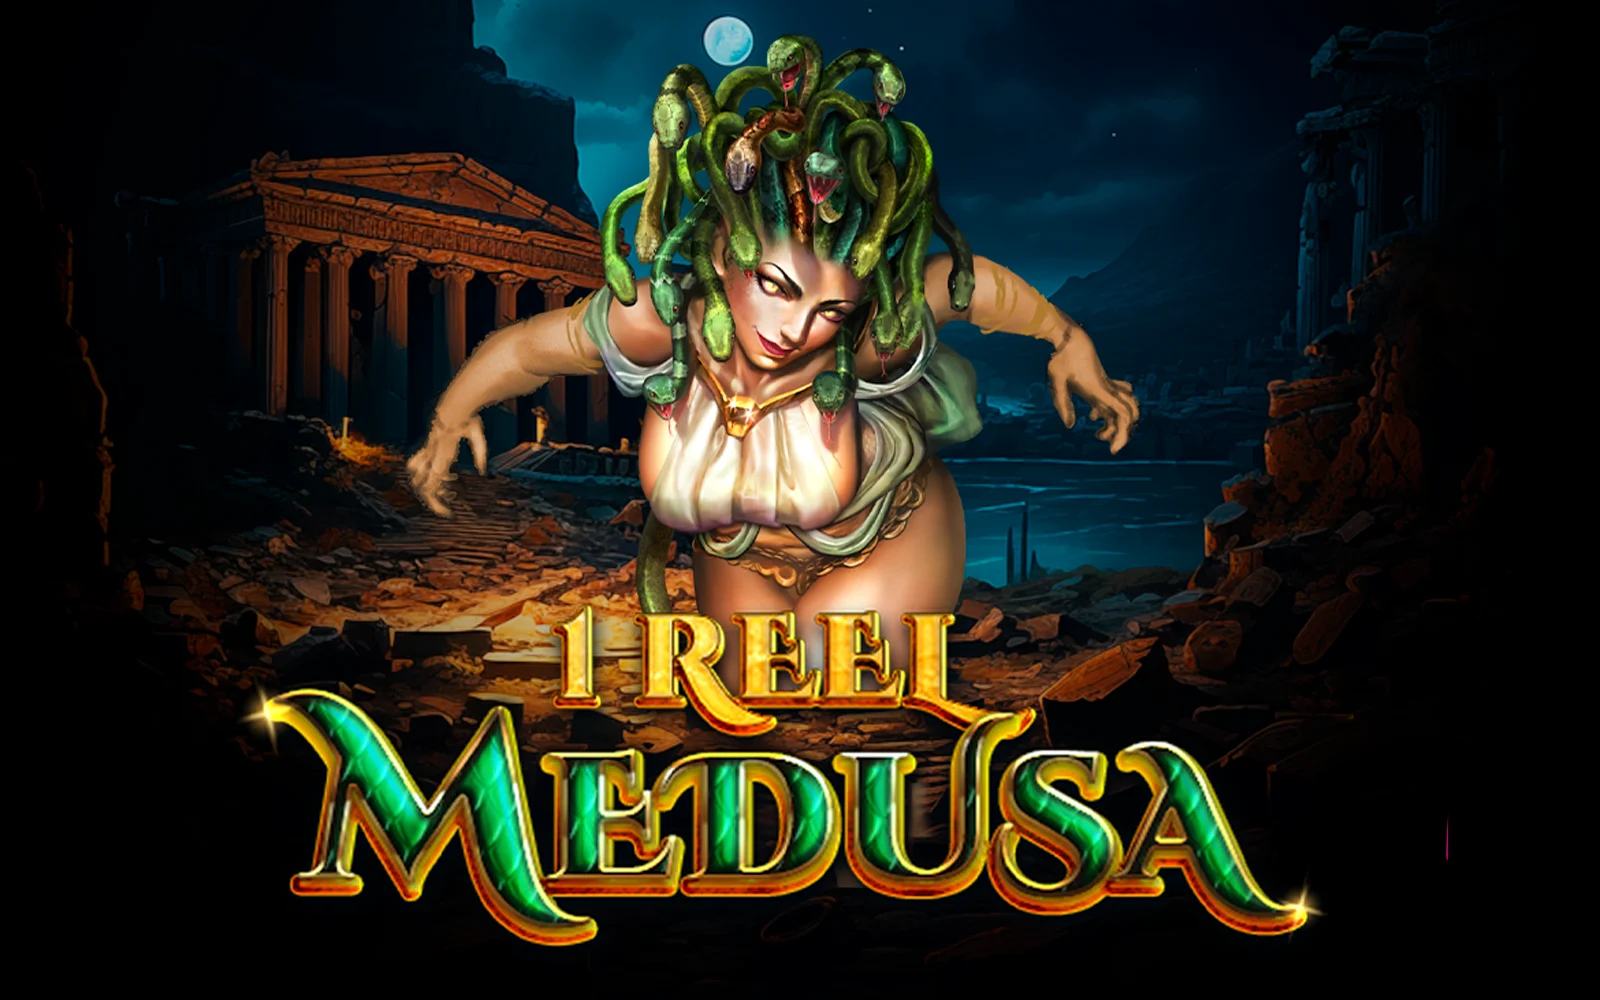 Joacă 1 Reel - Medusa™ în cazinoul online Starcasino.be